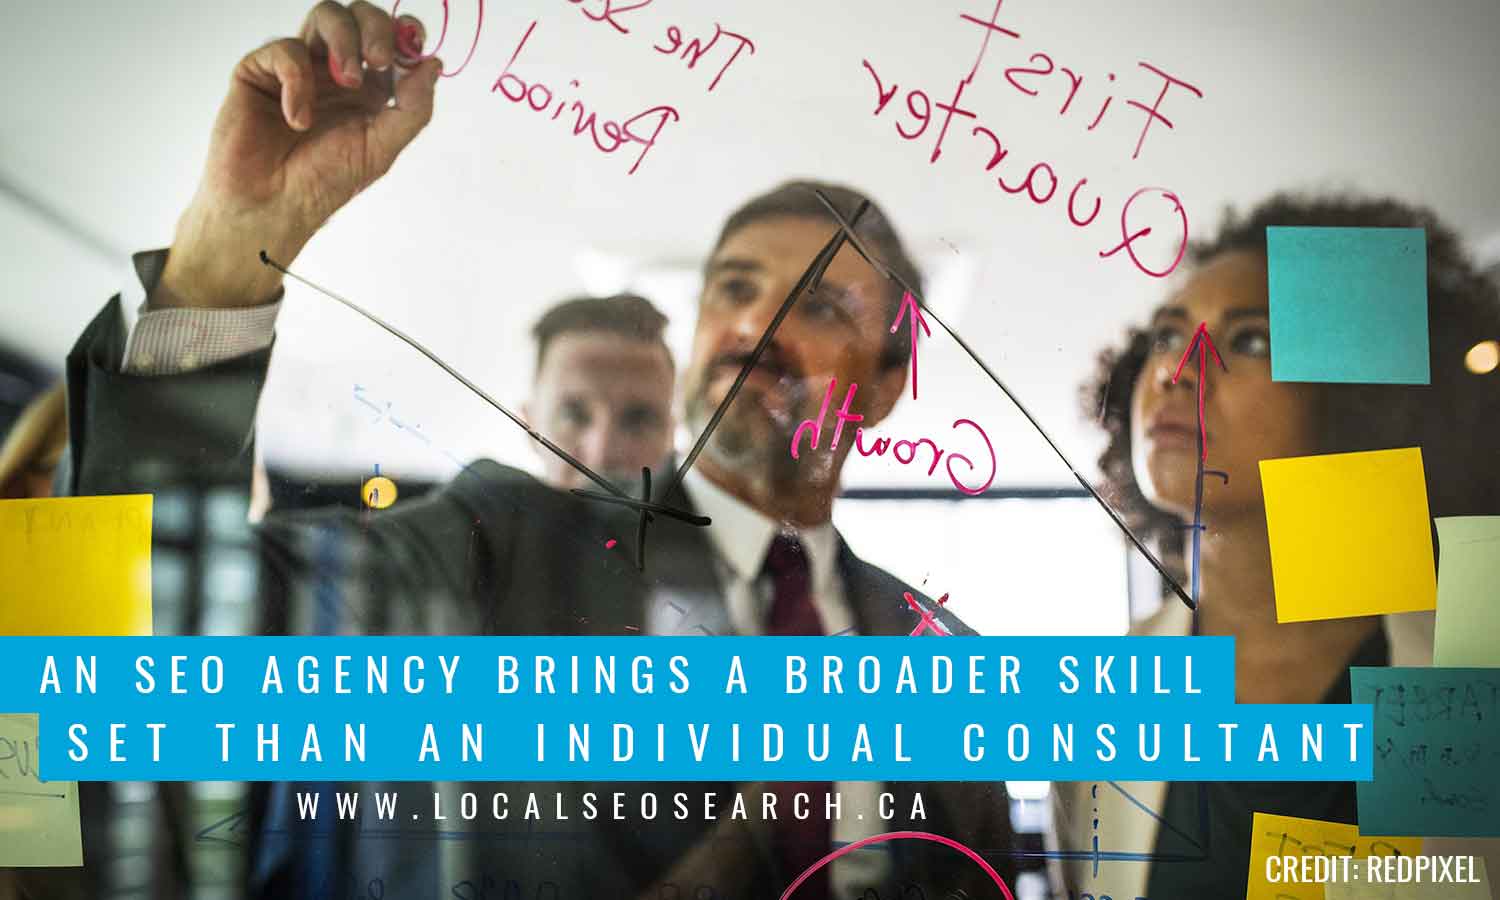 An SEO agency brings a broader skill set than an individual consultant